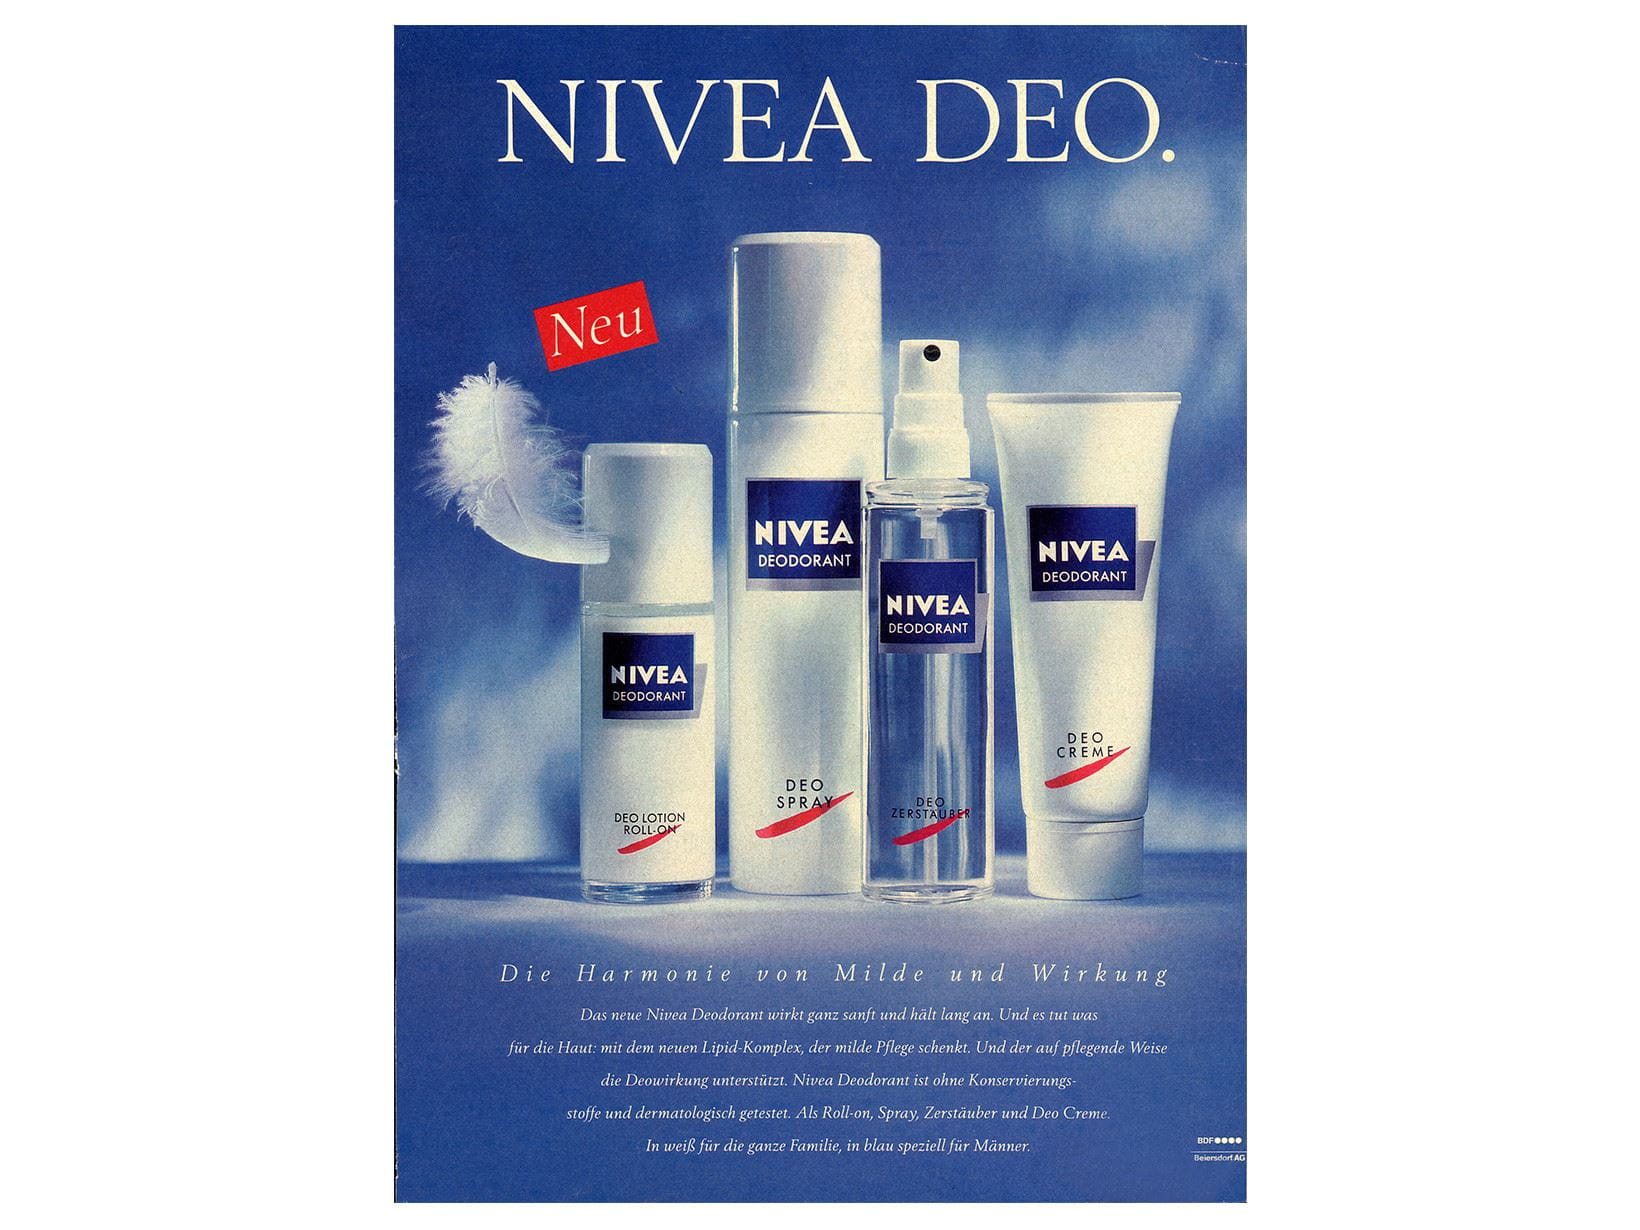 NIVEA Werbeanzeige Deo Launchkampagne 1991